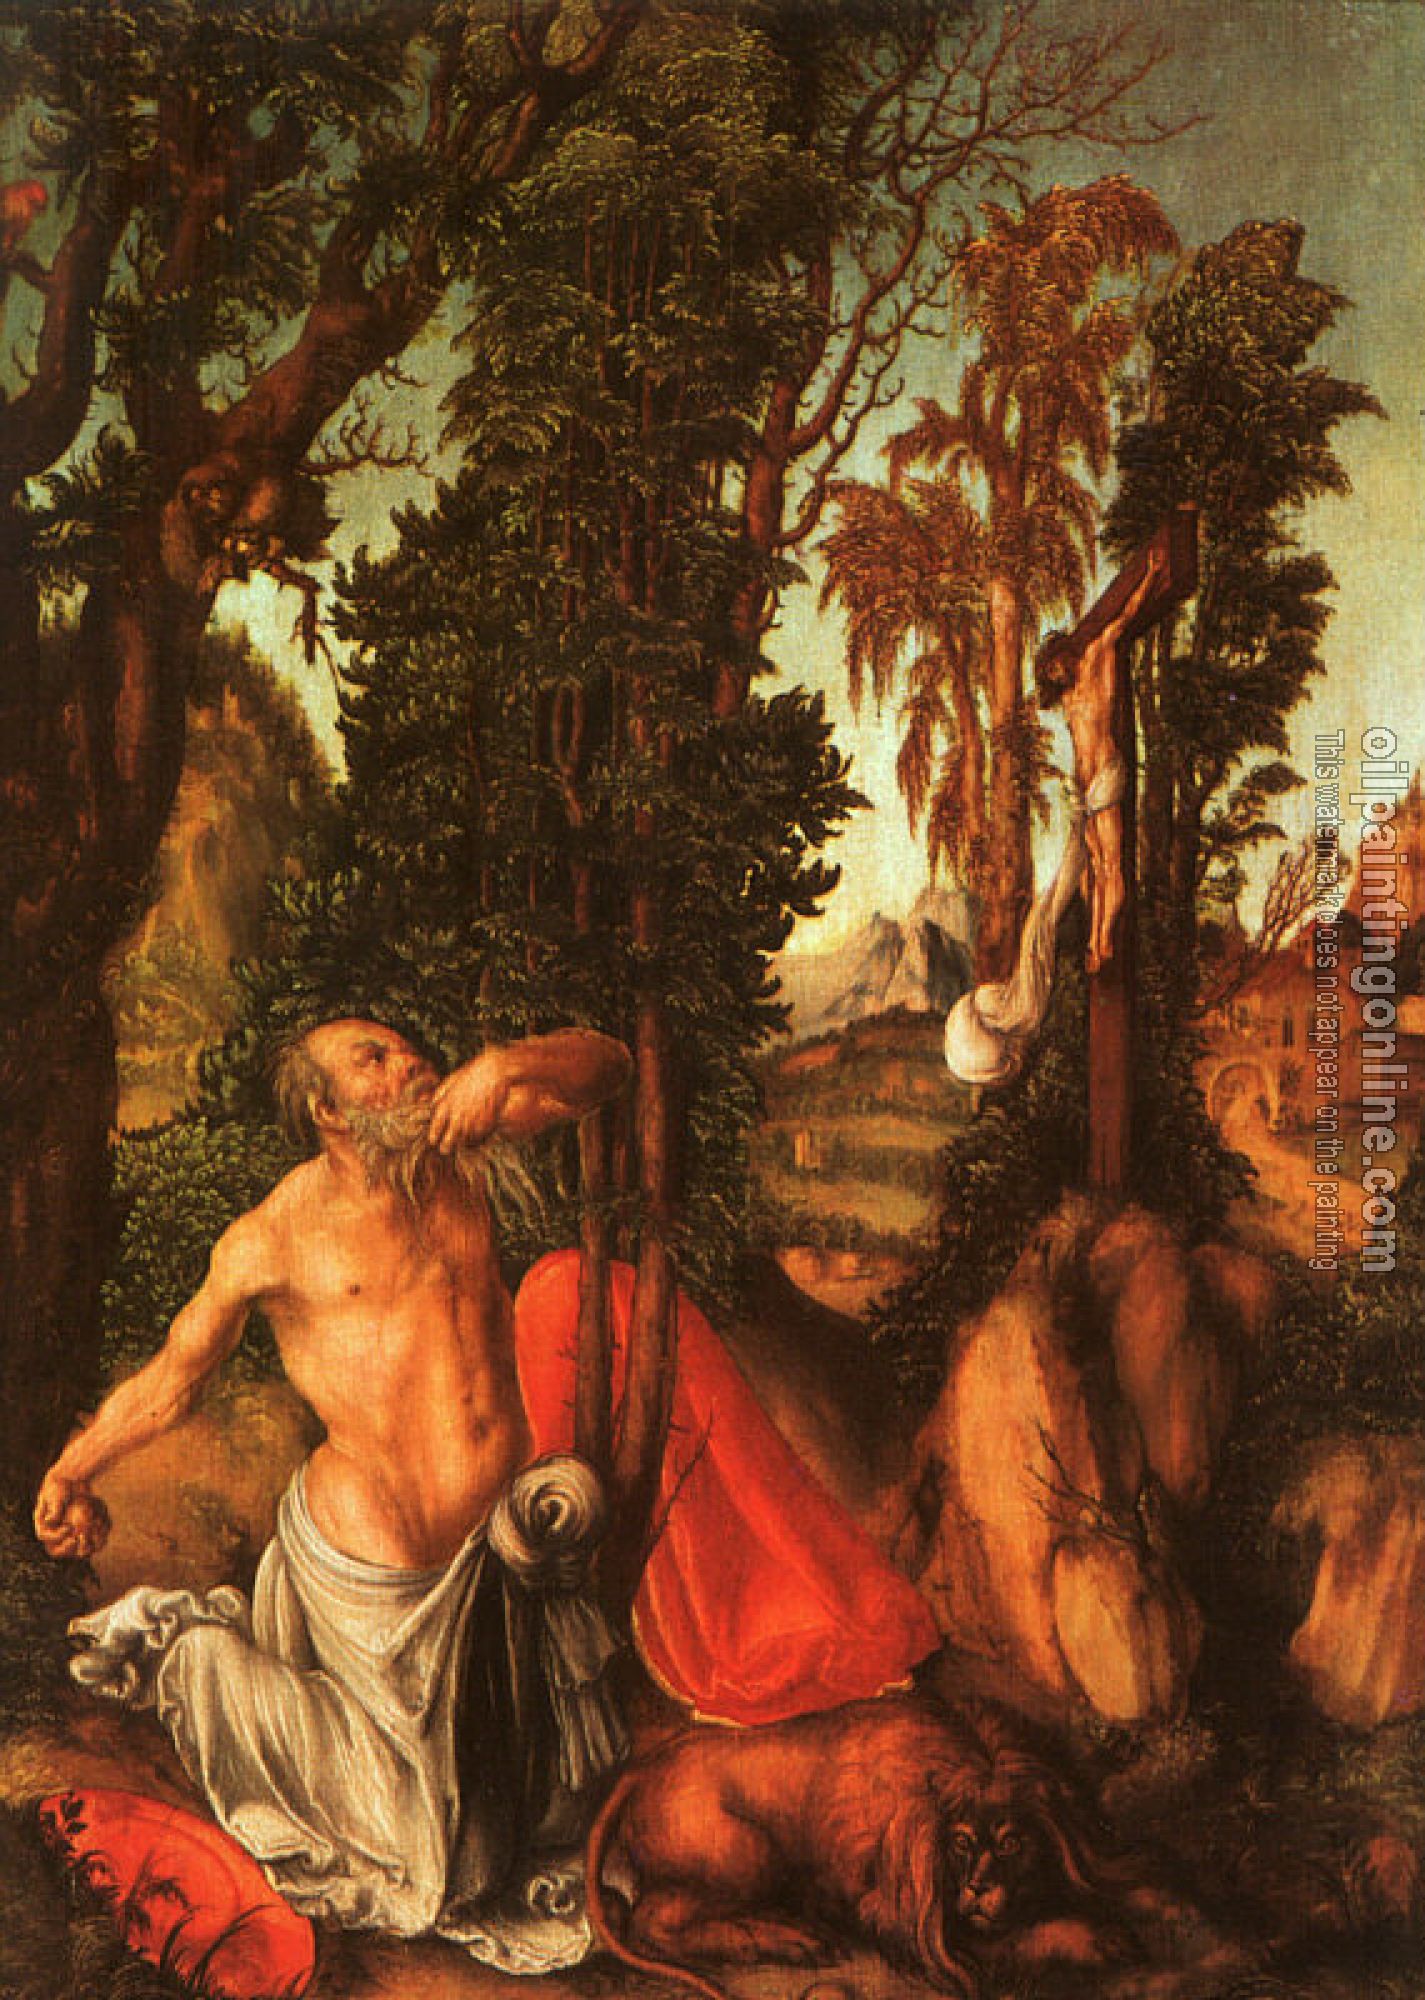 Cranach, Lucas the Elder - Oil Painting